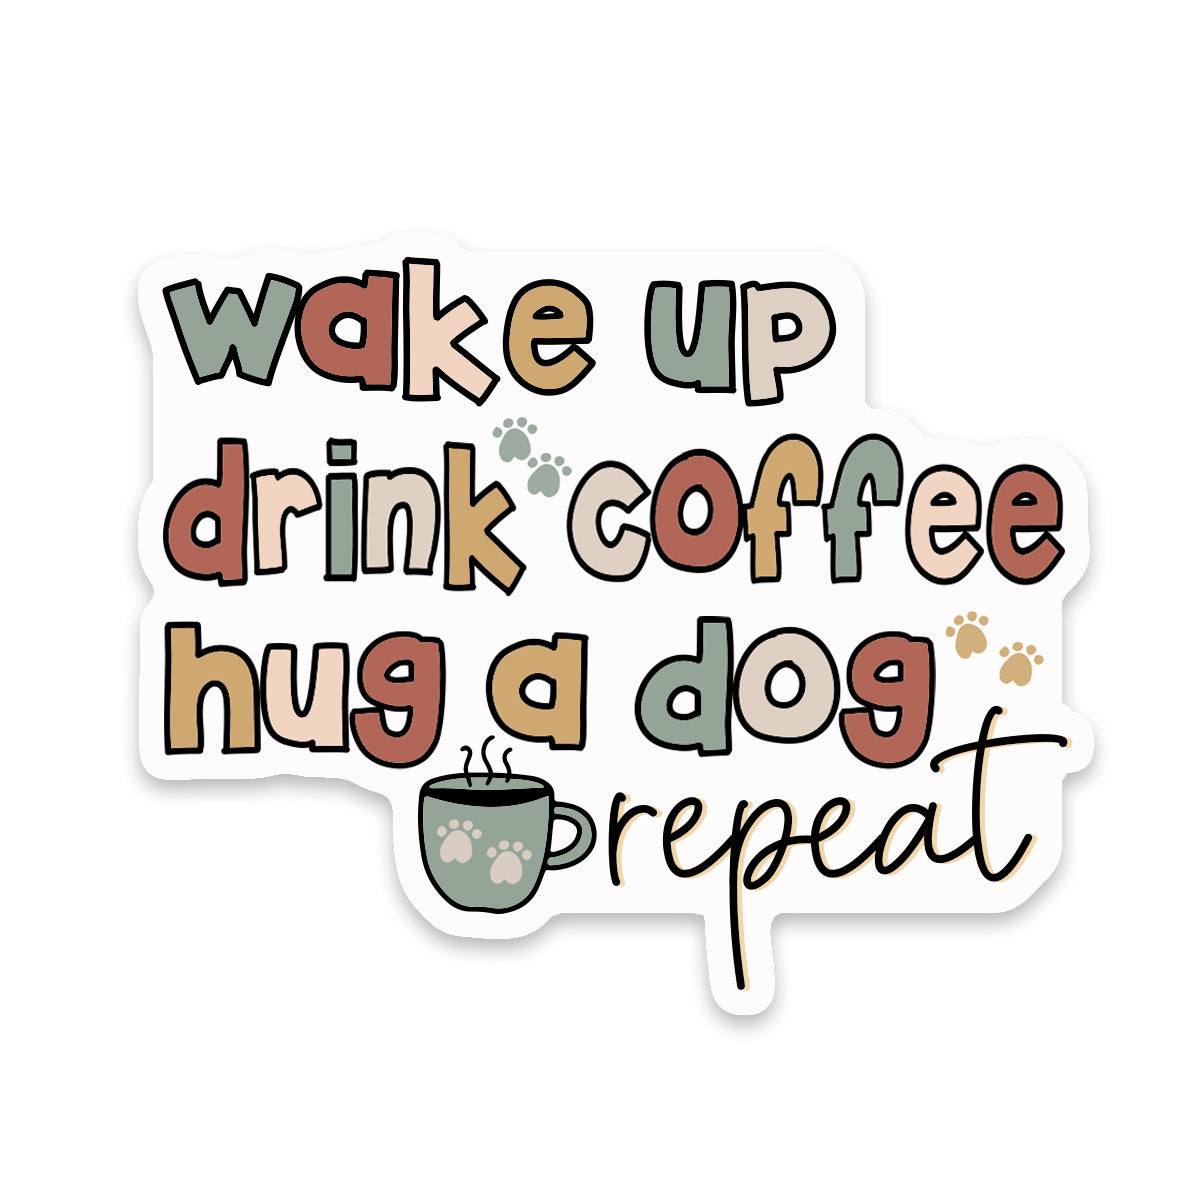 Wake up drink coffee hug dog repeat sticker